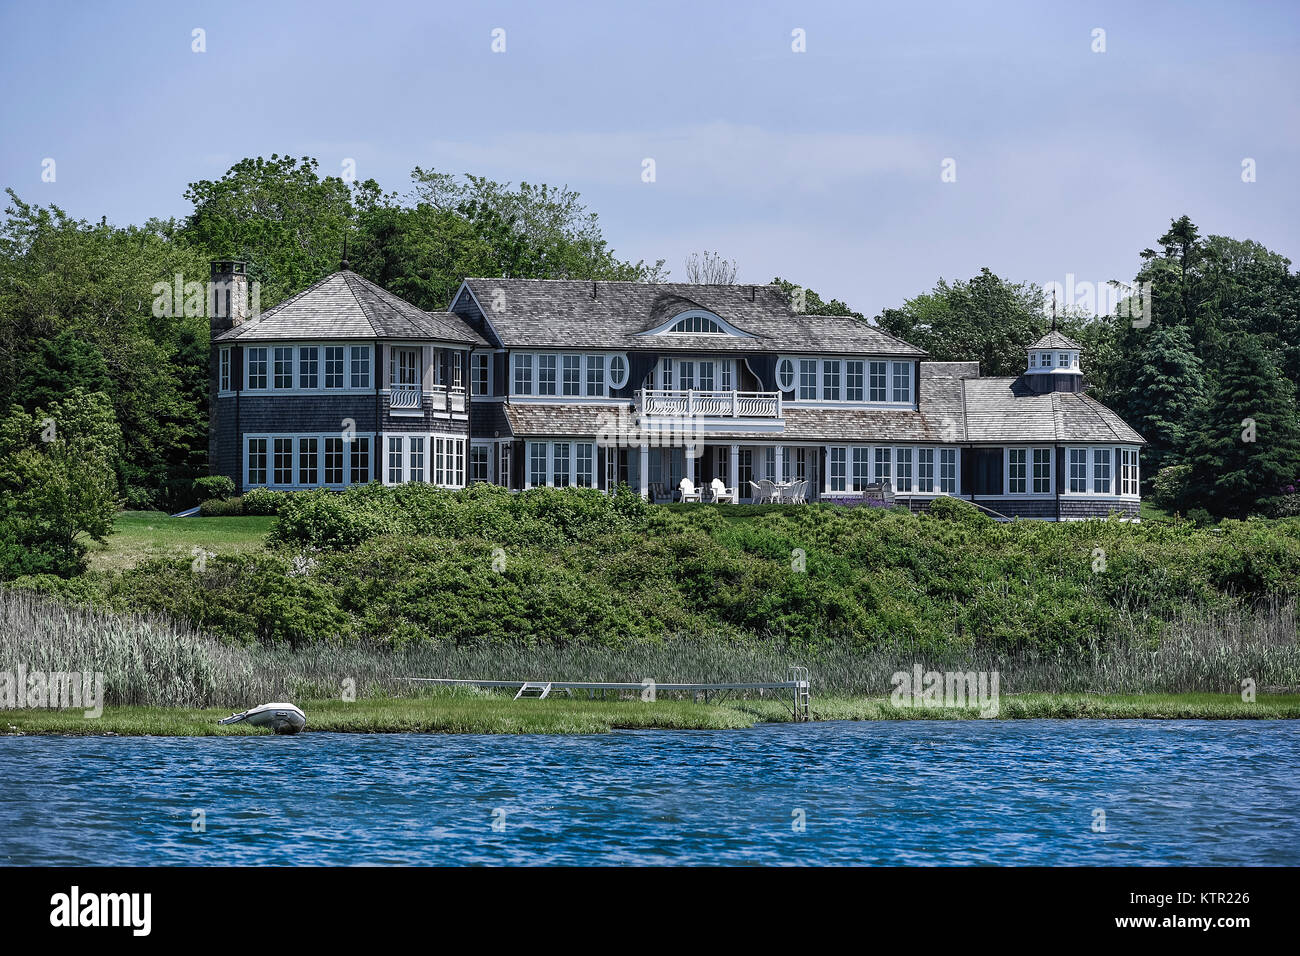 Waterfront mansion, Chatham, Cape Cod, Massachusetts, USA. Stock Photo